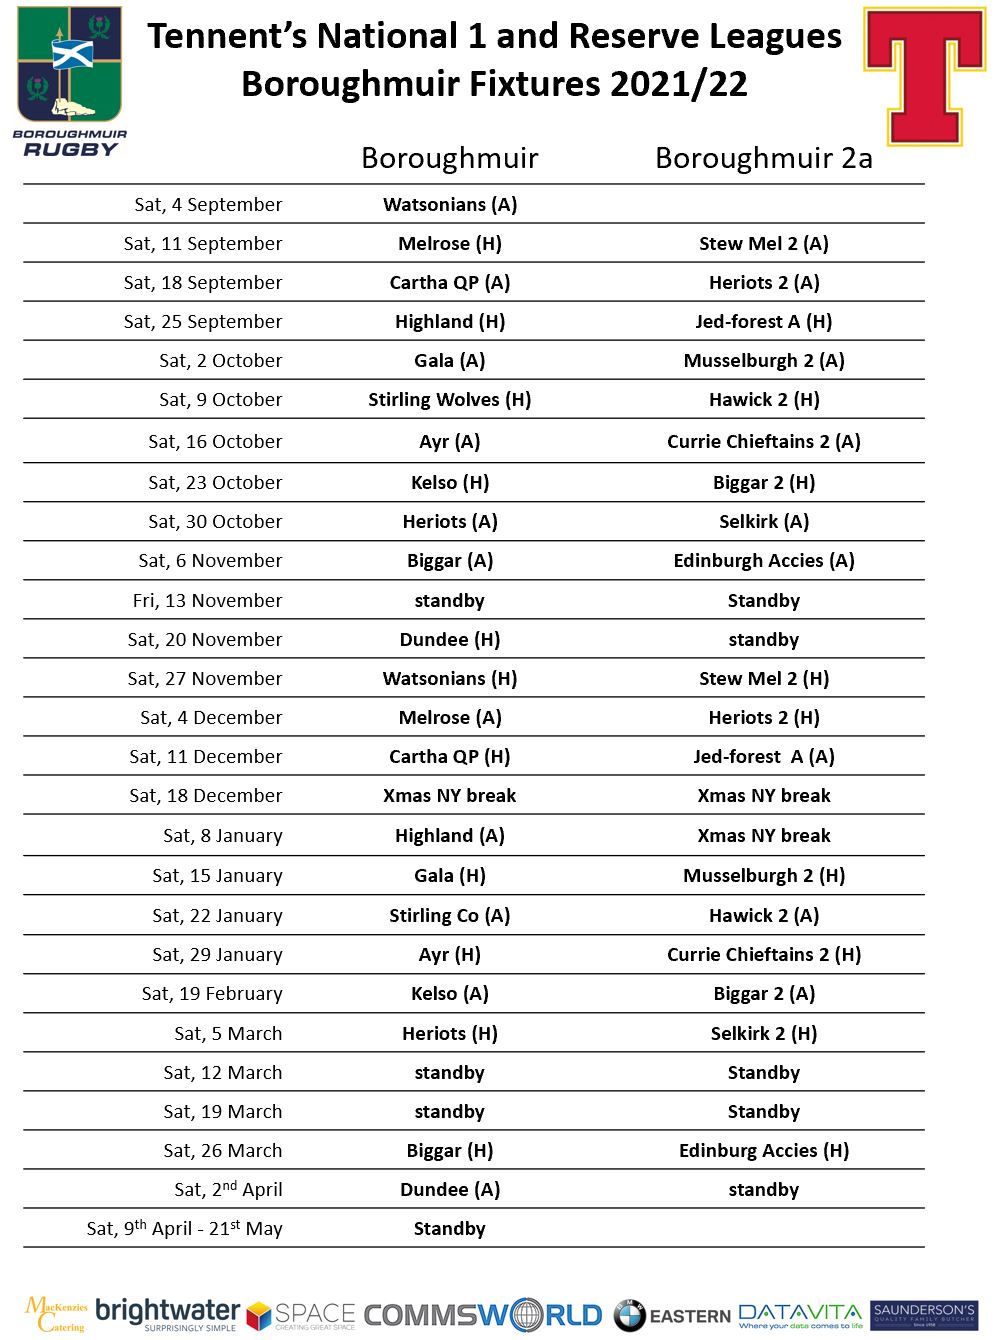 Daftar Pertandingan Rugby Senior Tennent